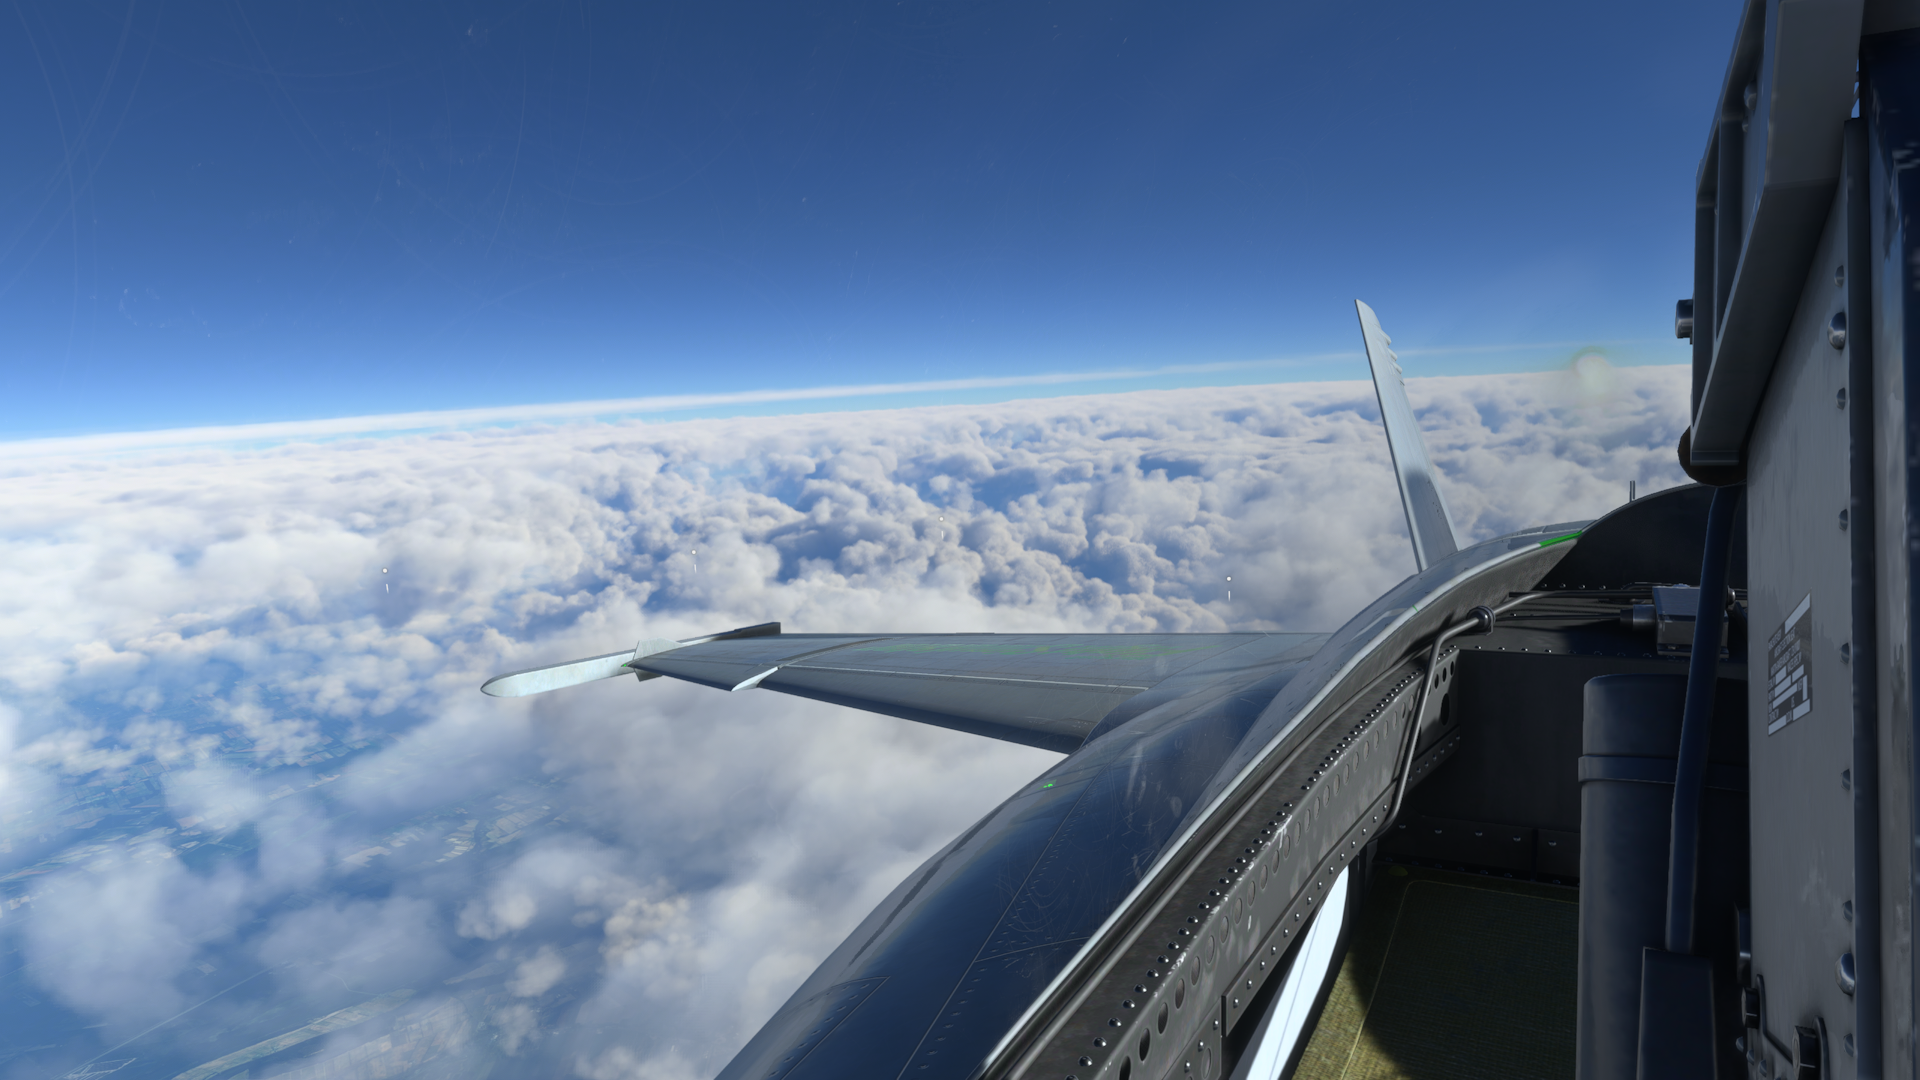 Backseat view from the F-18 | Microsoft Flight Simulator